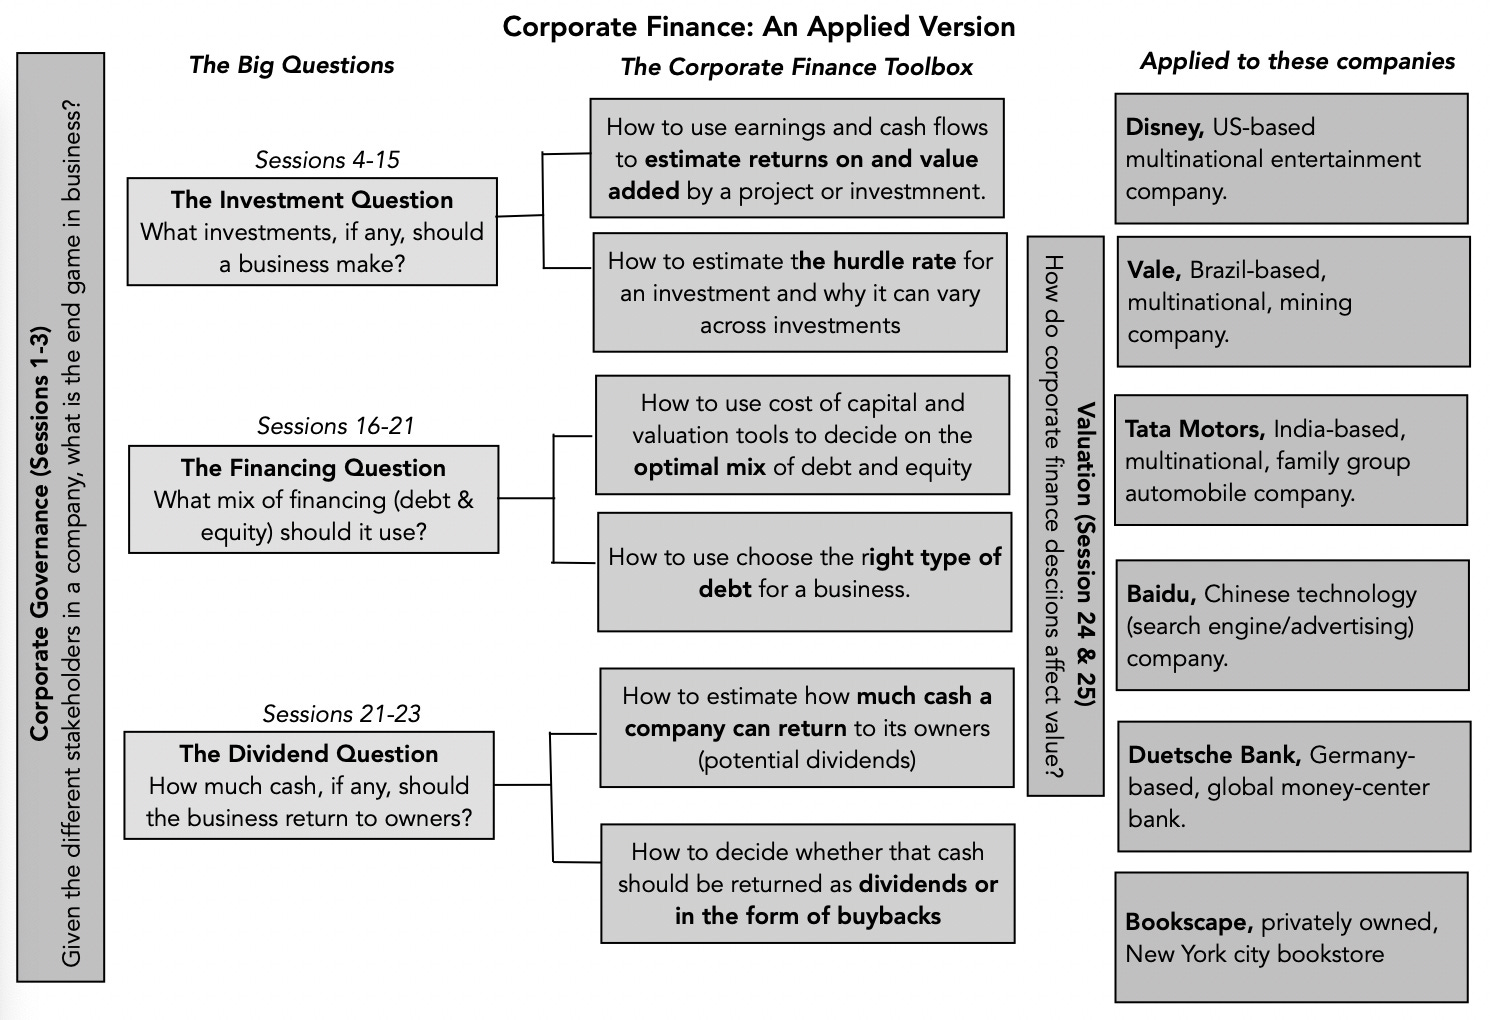 Aquafairy Company Profile: Valuation, Funding & Investors